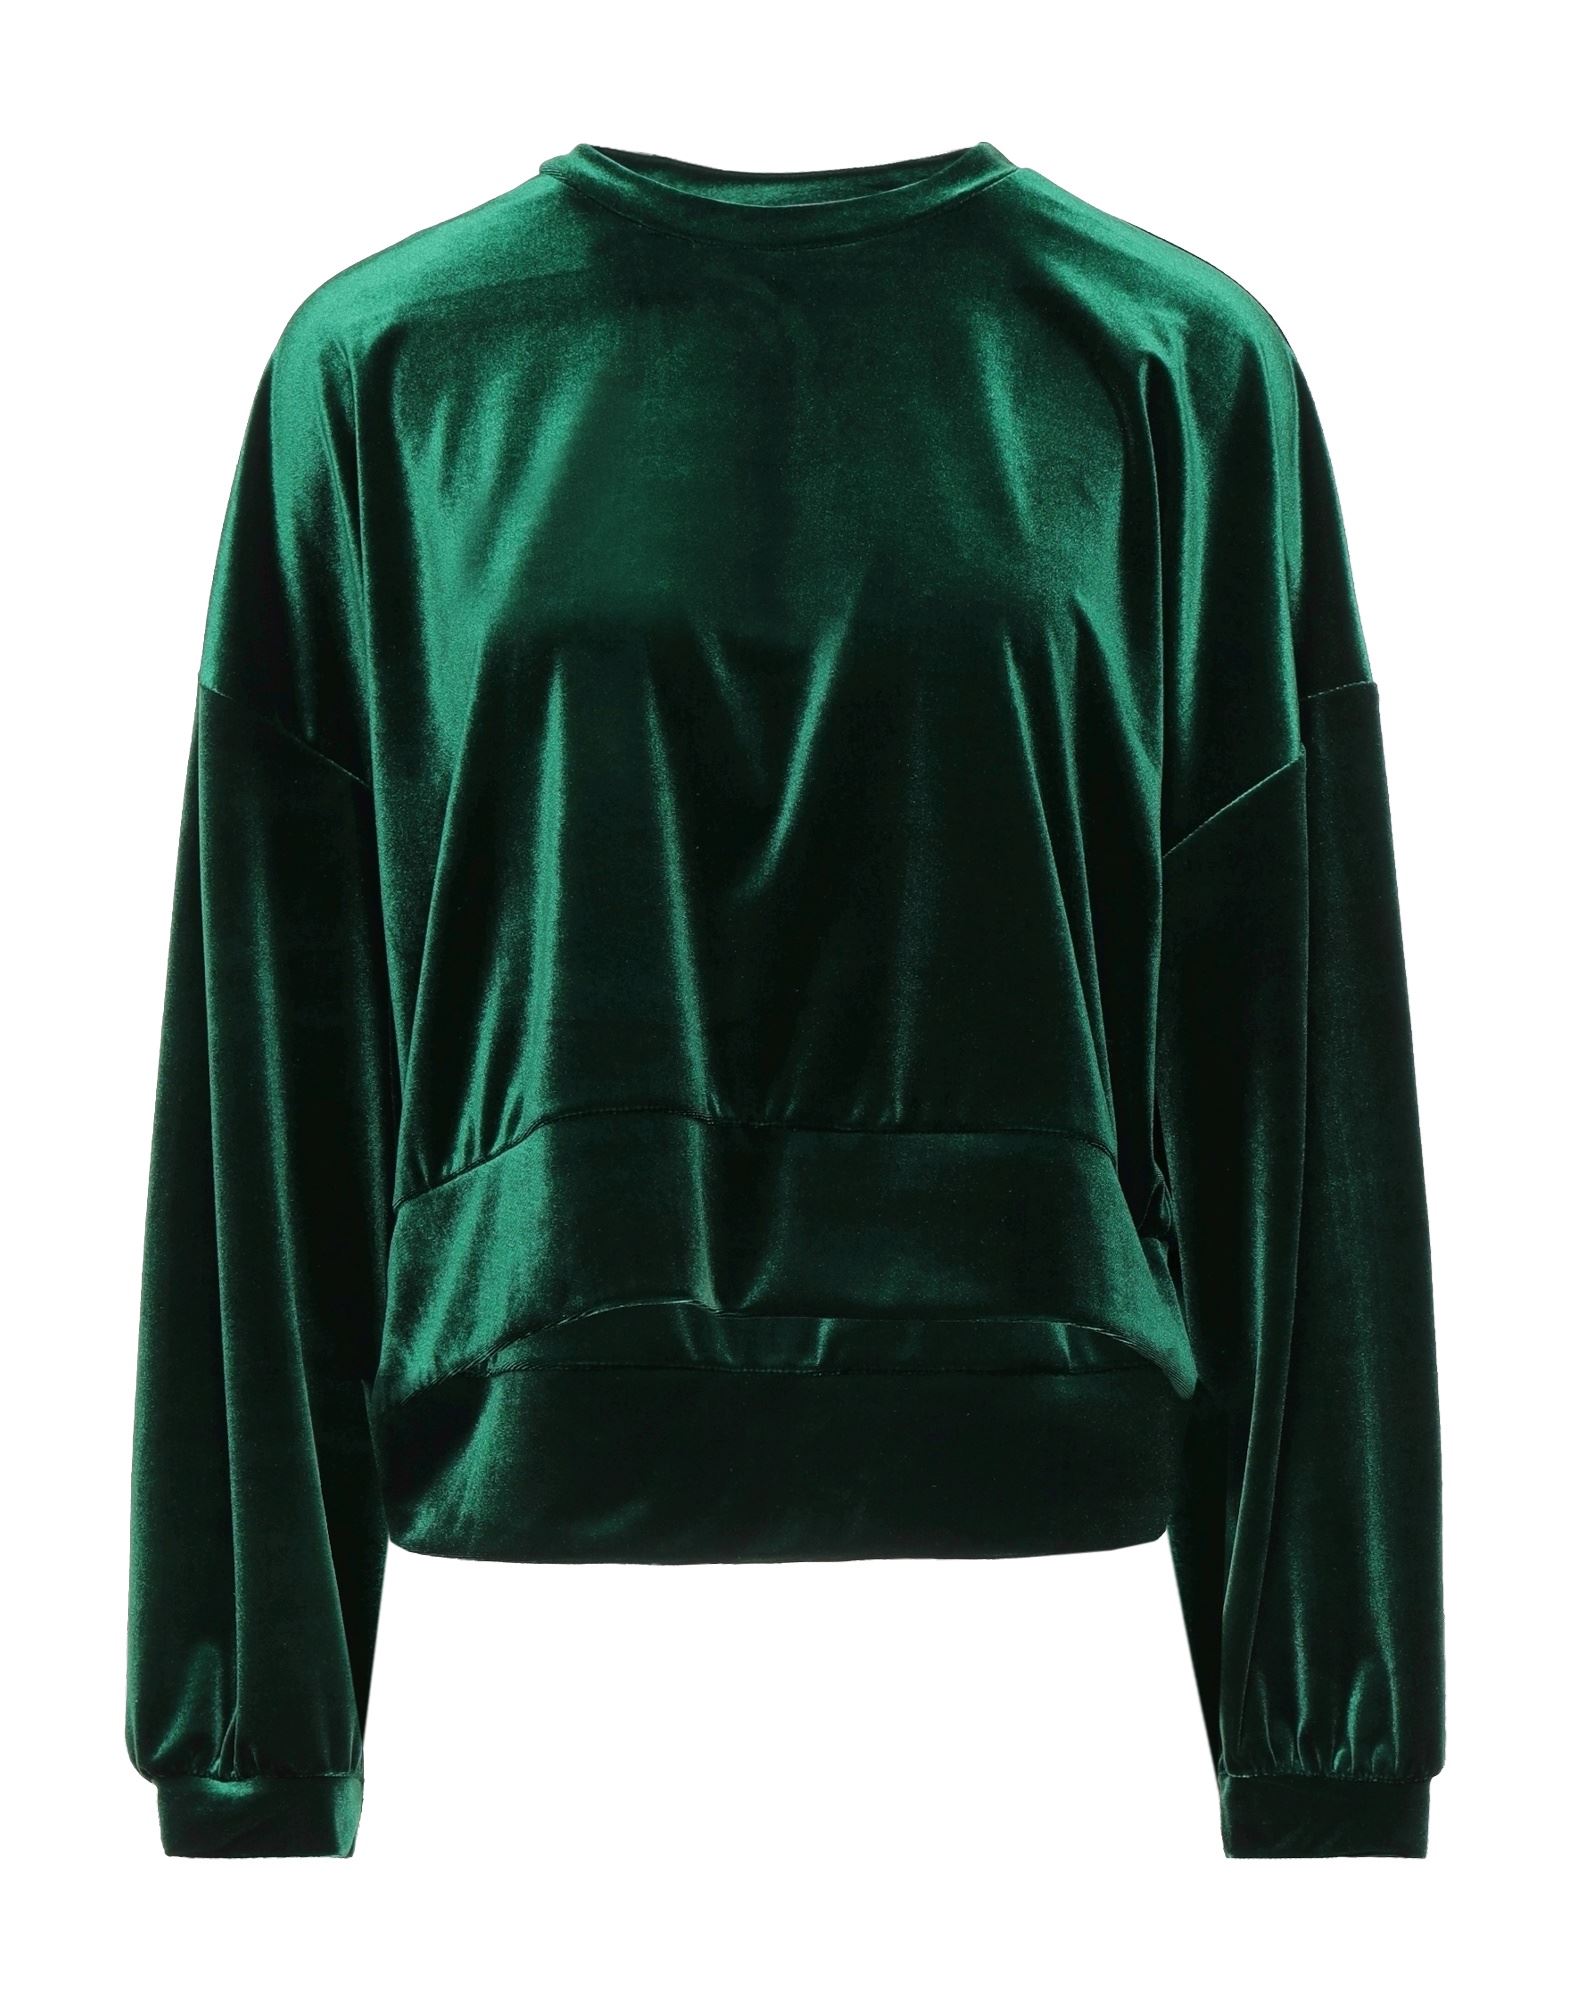 Alessandra Gallo Sweatshirts In Emerald Green